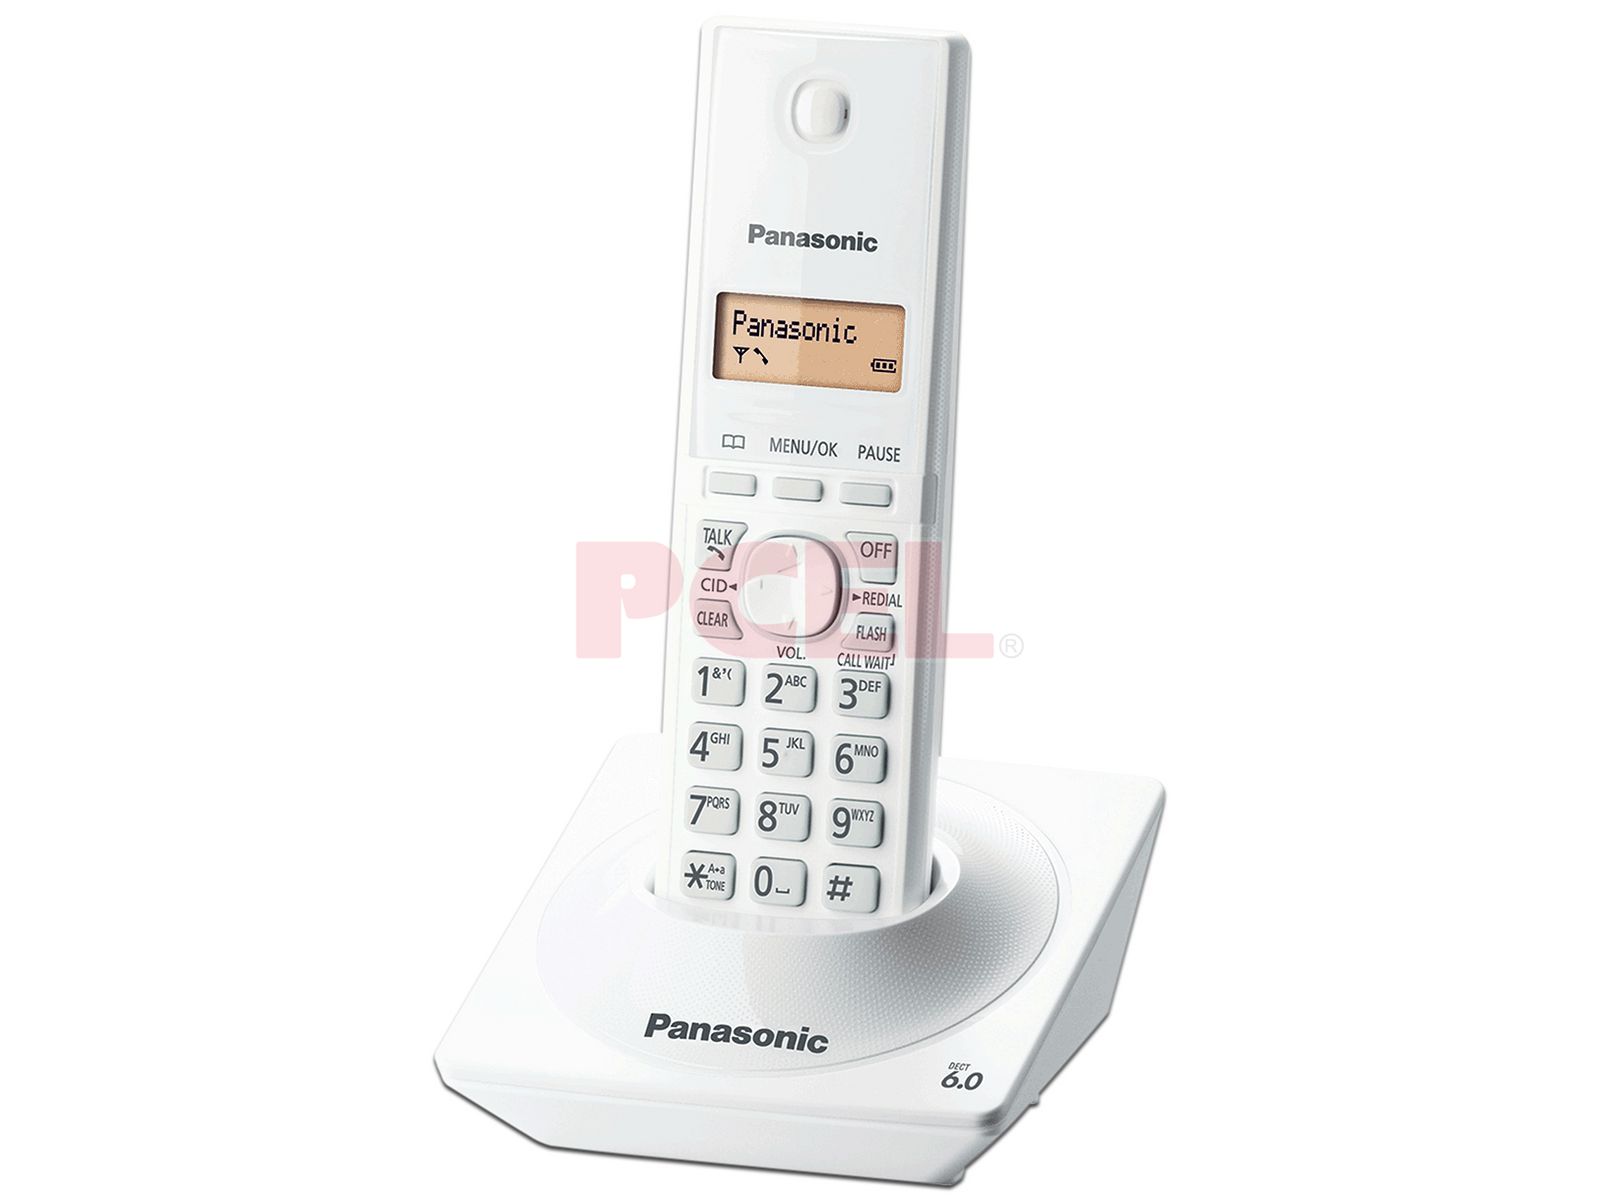 Teléfonos inalámbricos de colores de Panasonic